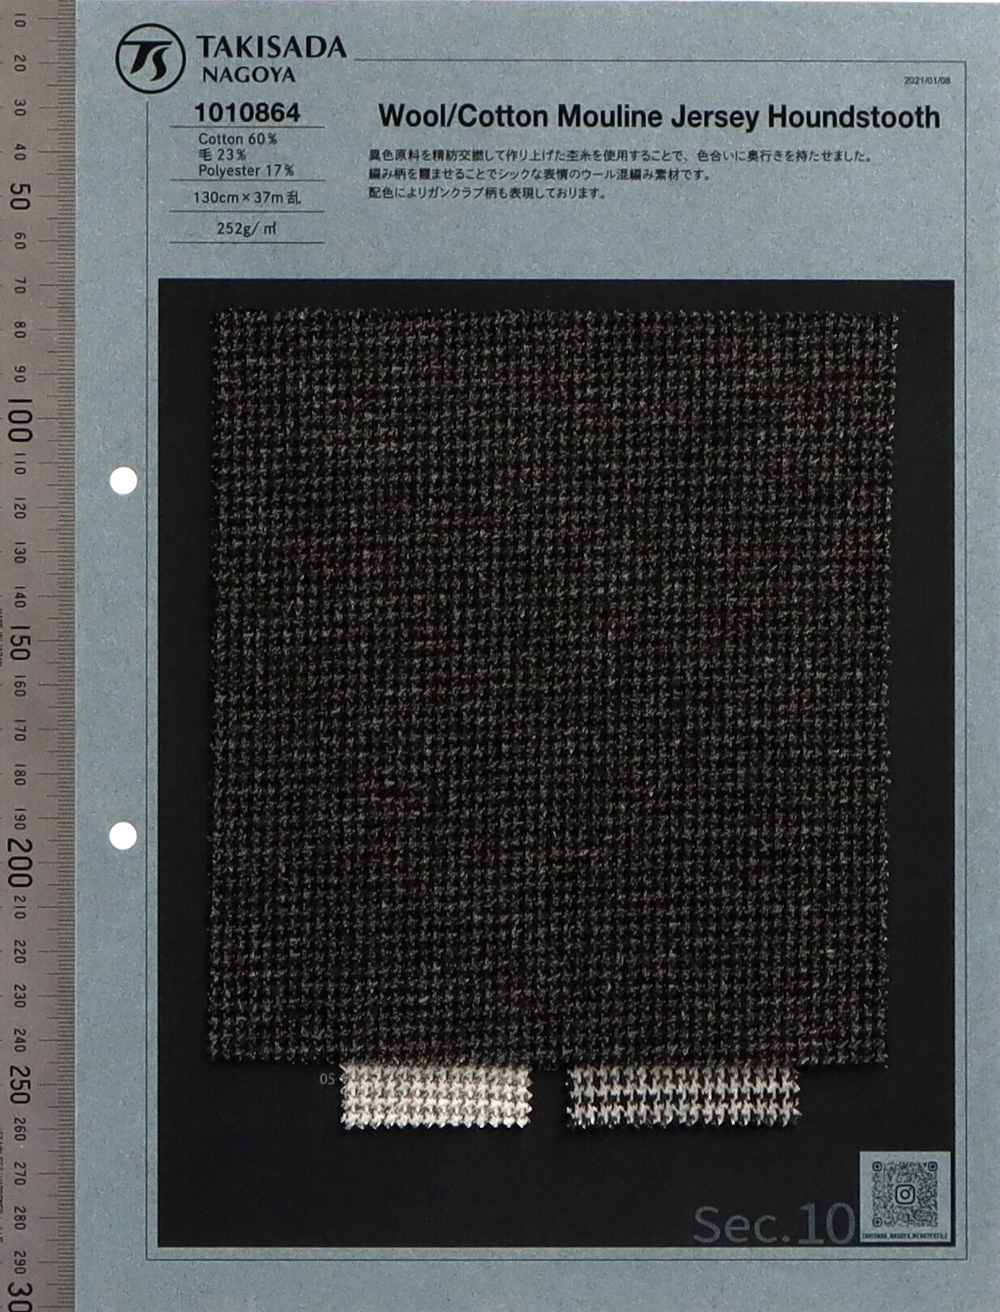 1010864 Wool / Cotton Melange Jersey Houndstooth Pattern[Textile / Fabric] Takisada Nagoya